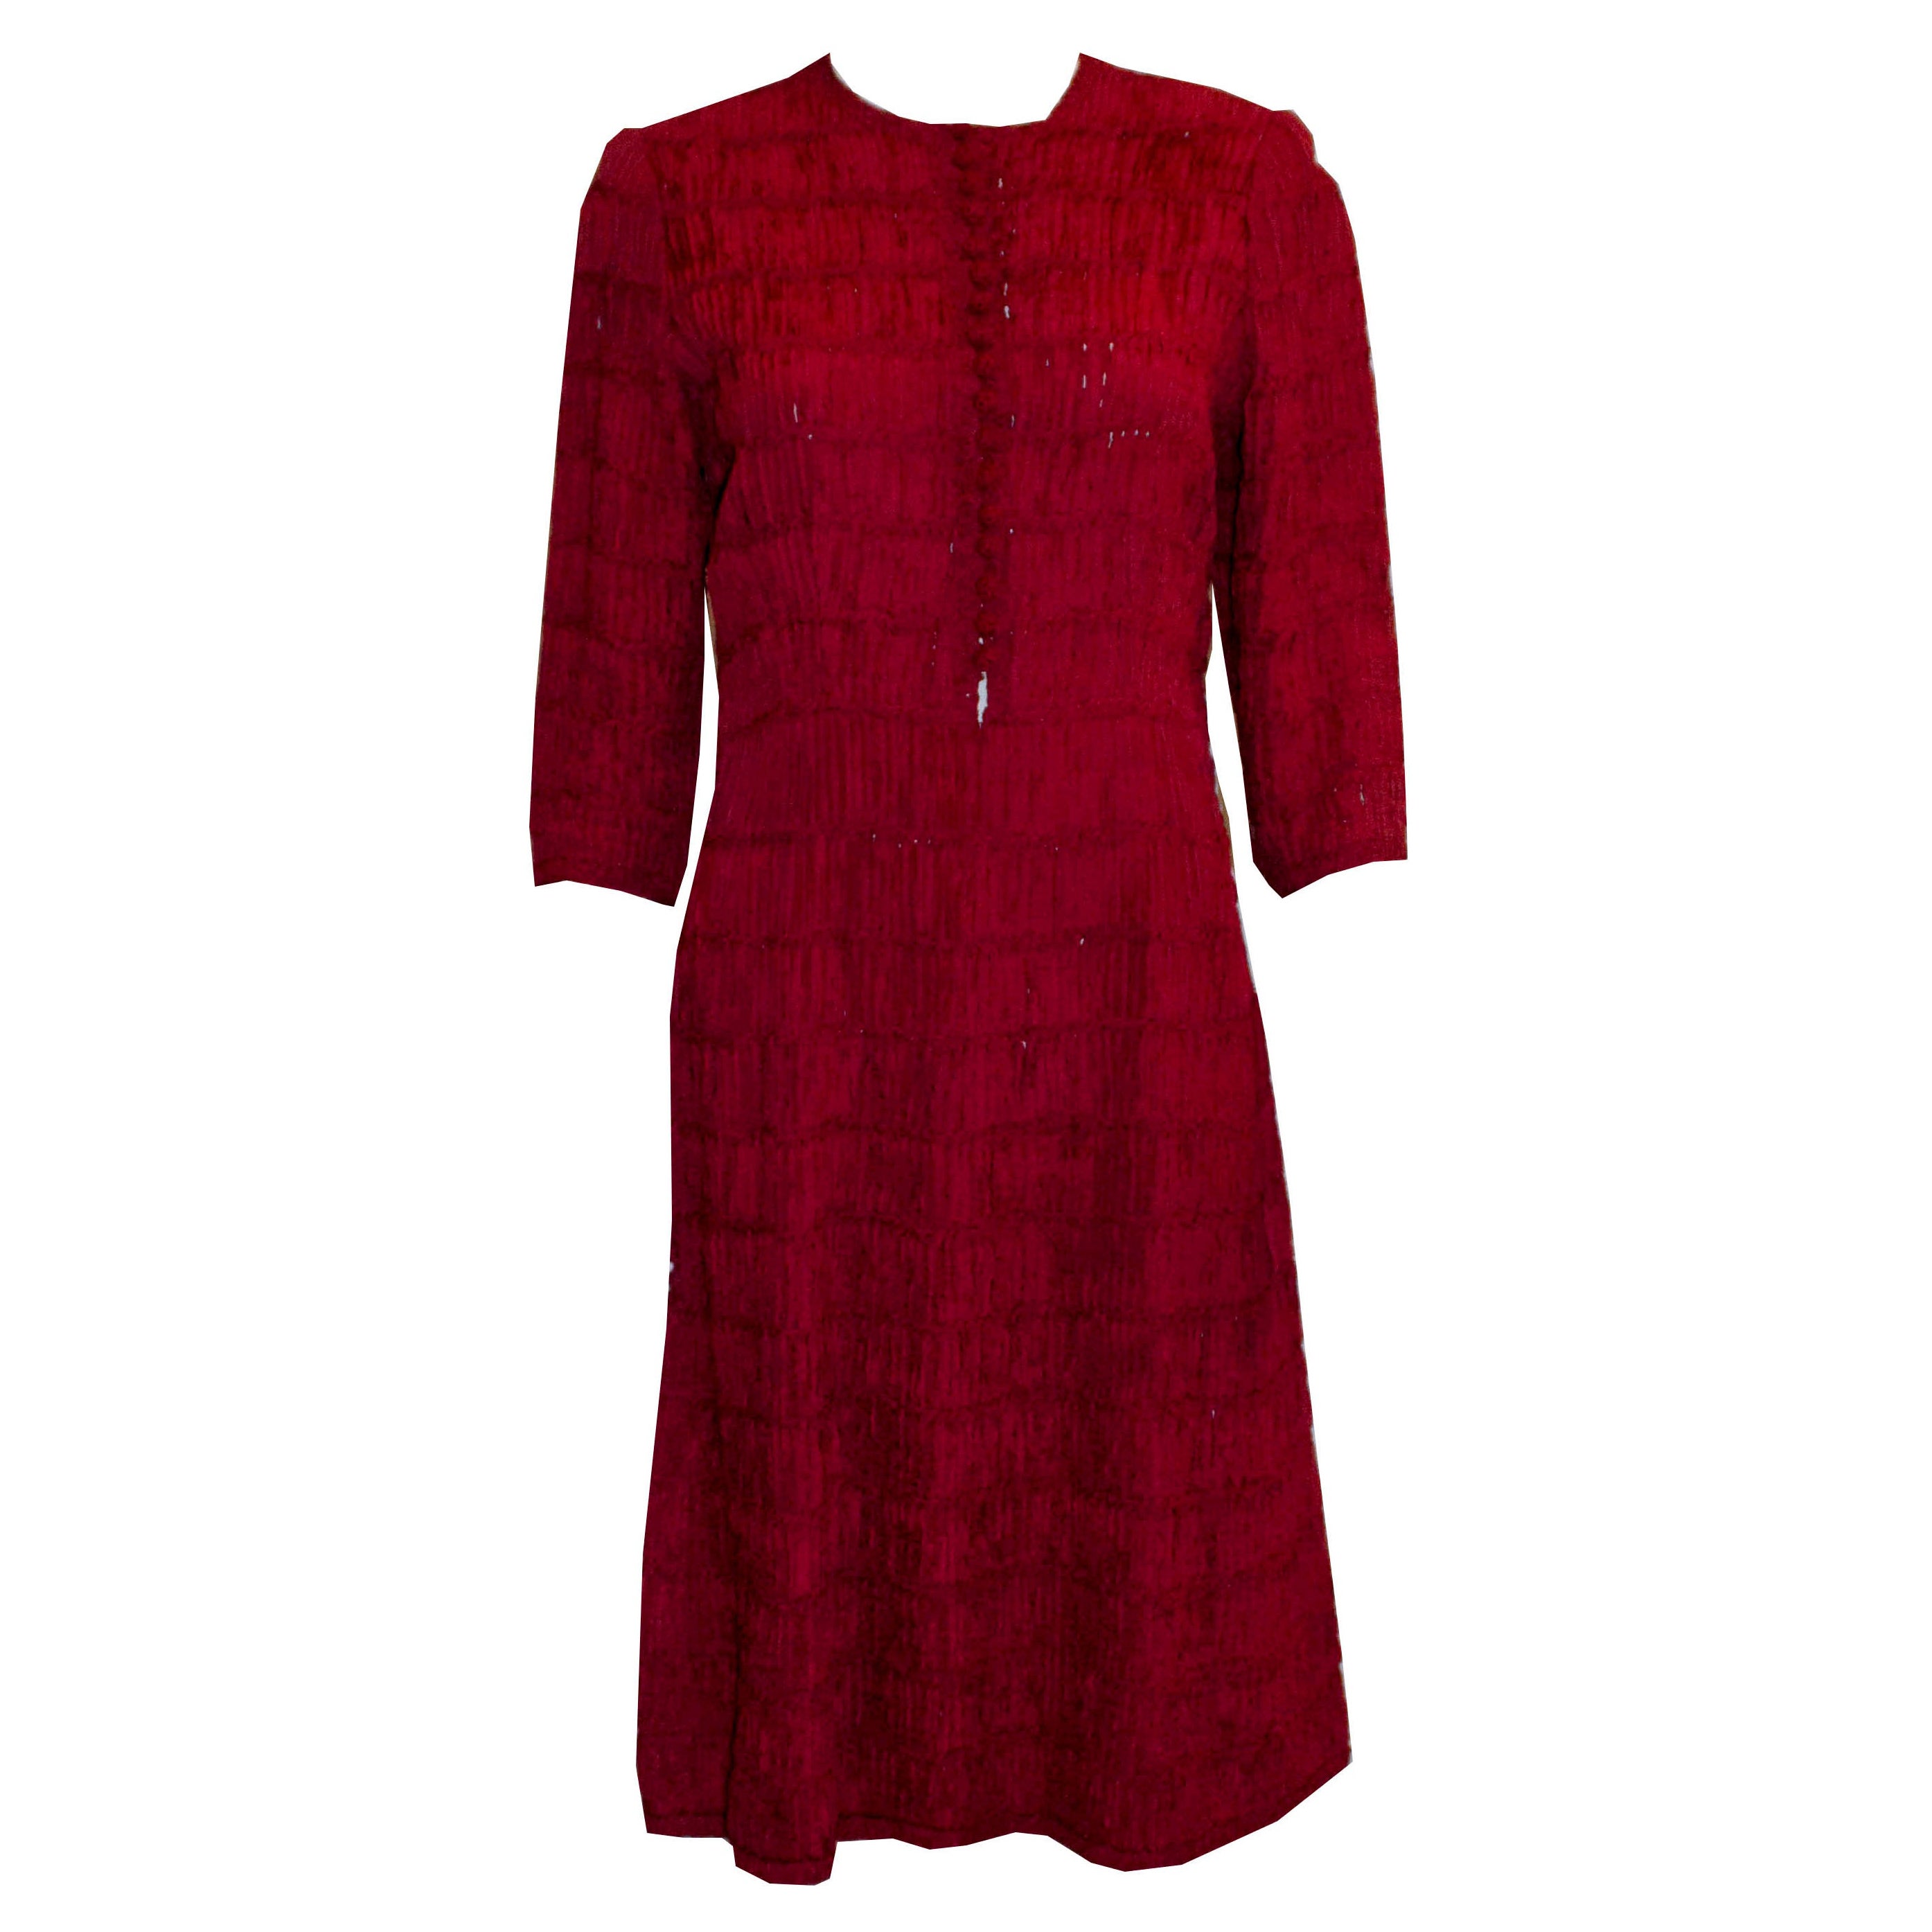 Vintage Red Ribbonwork Dress by Glengyle